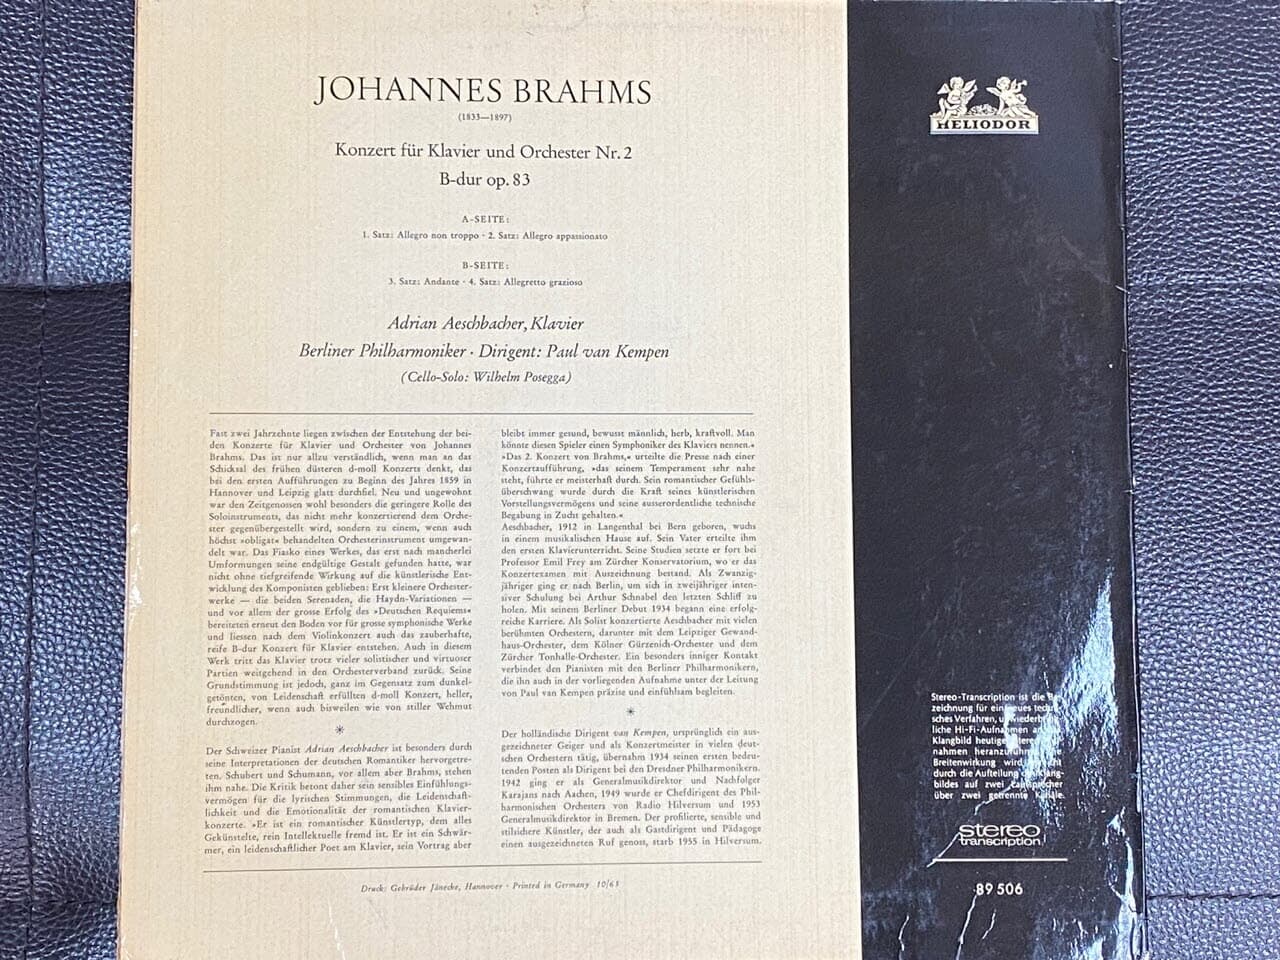 [LP] 아드리안 애쉬바허 - Adrian Aechhacher - Brahms Nr.2 B-dur Op.83 LP [독일반]